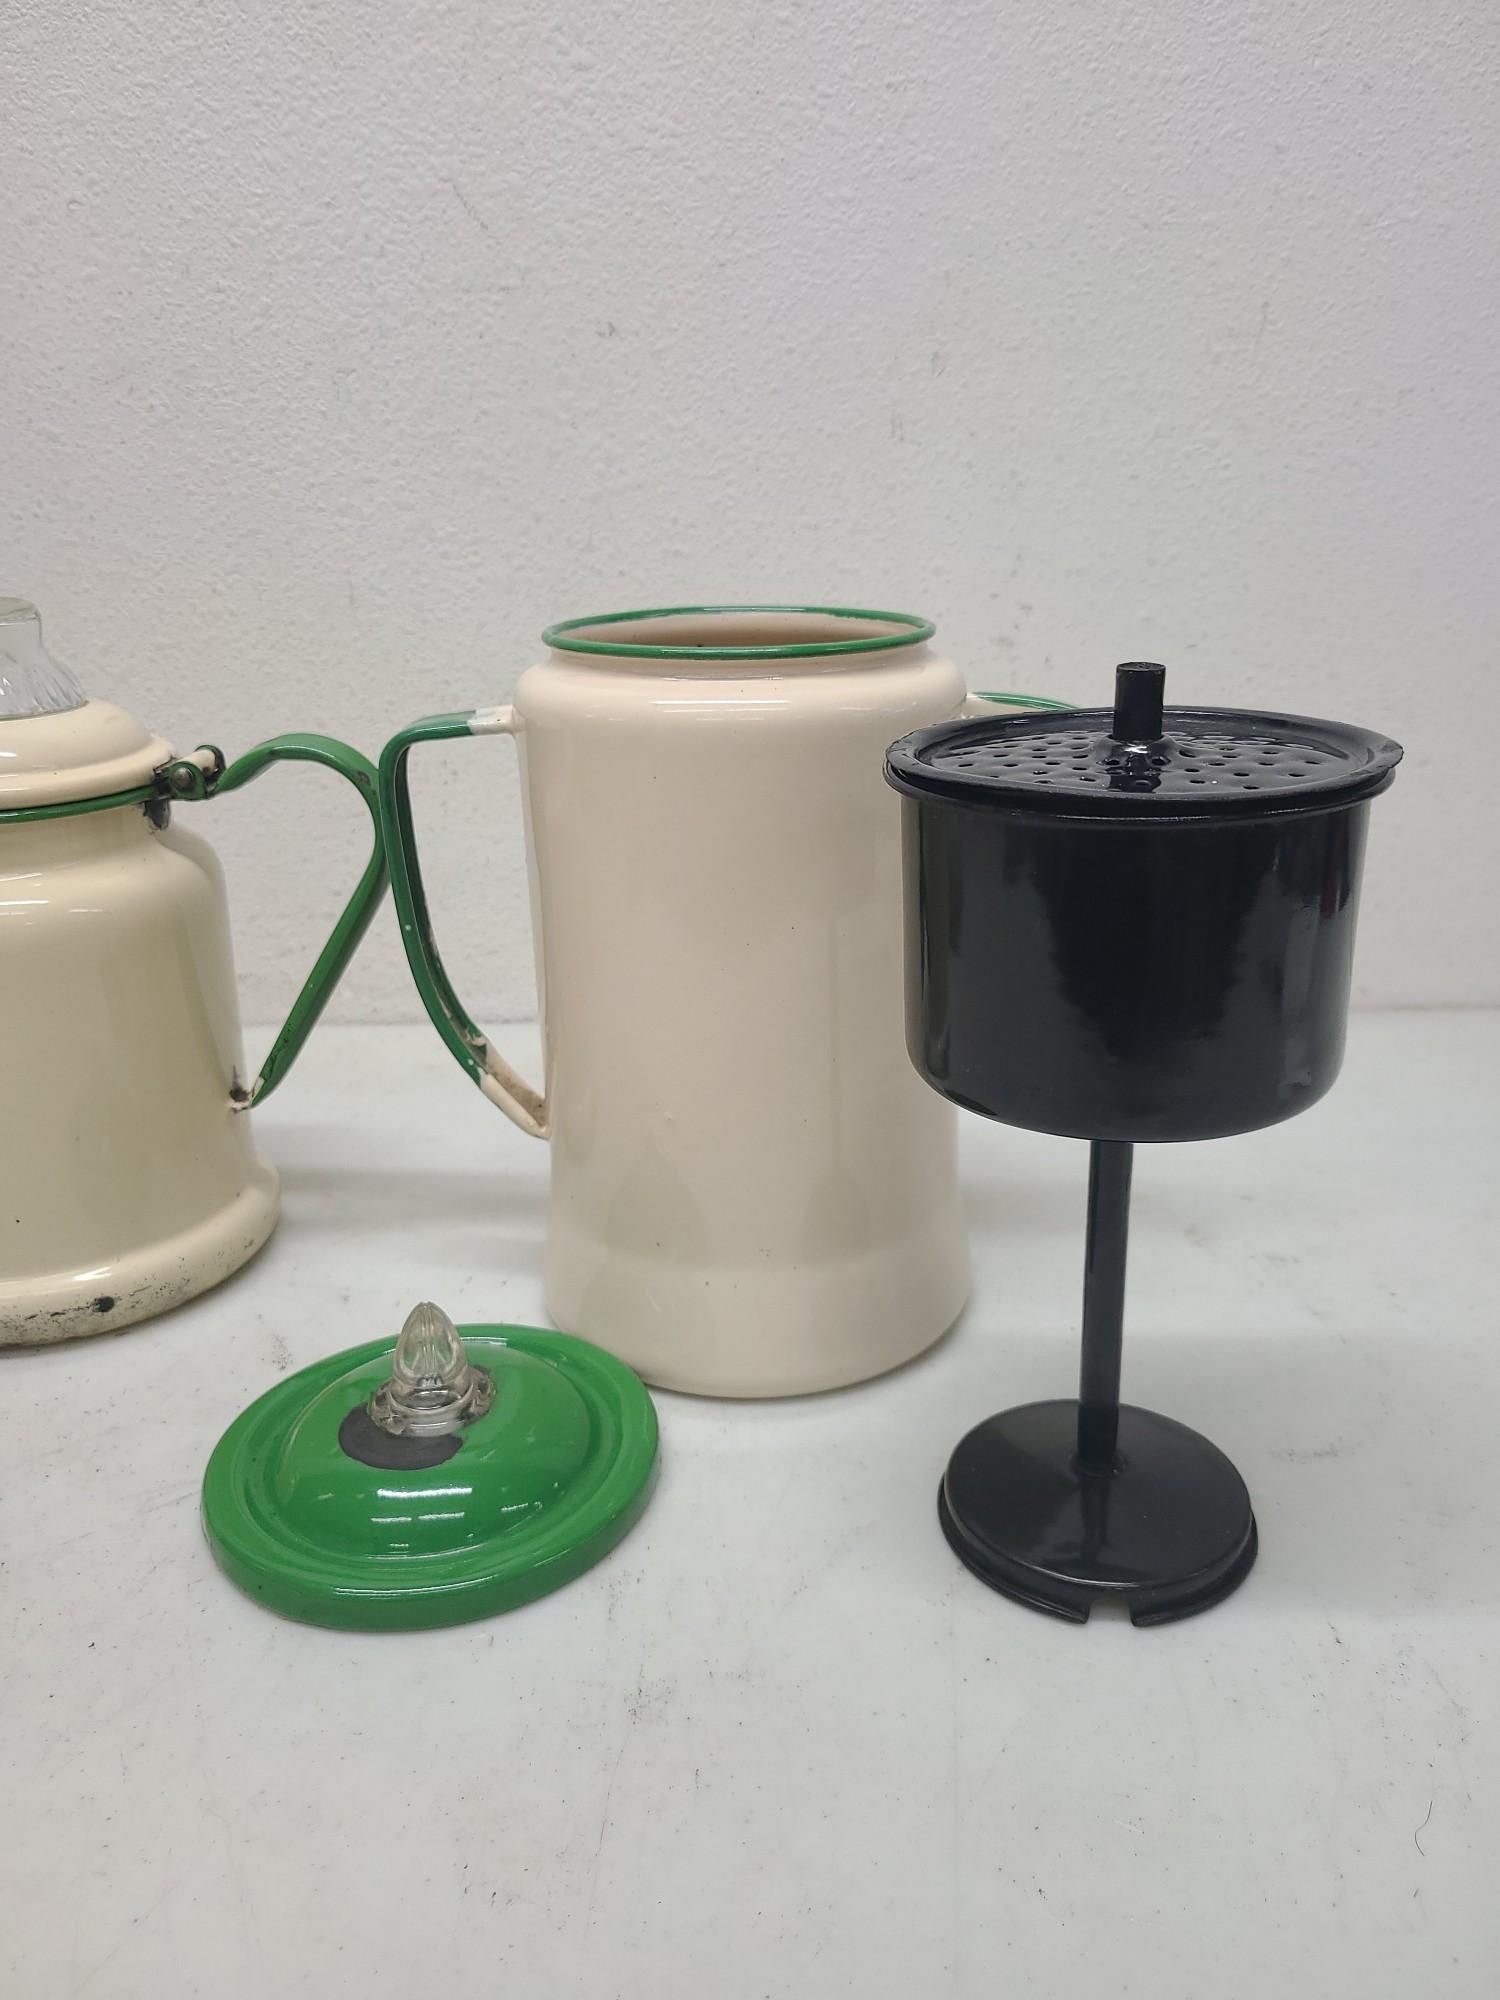 3x Enamelware Tea & Coffee Pots Cream and Green